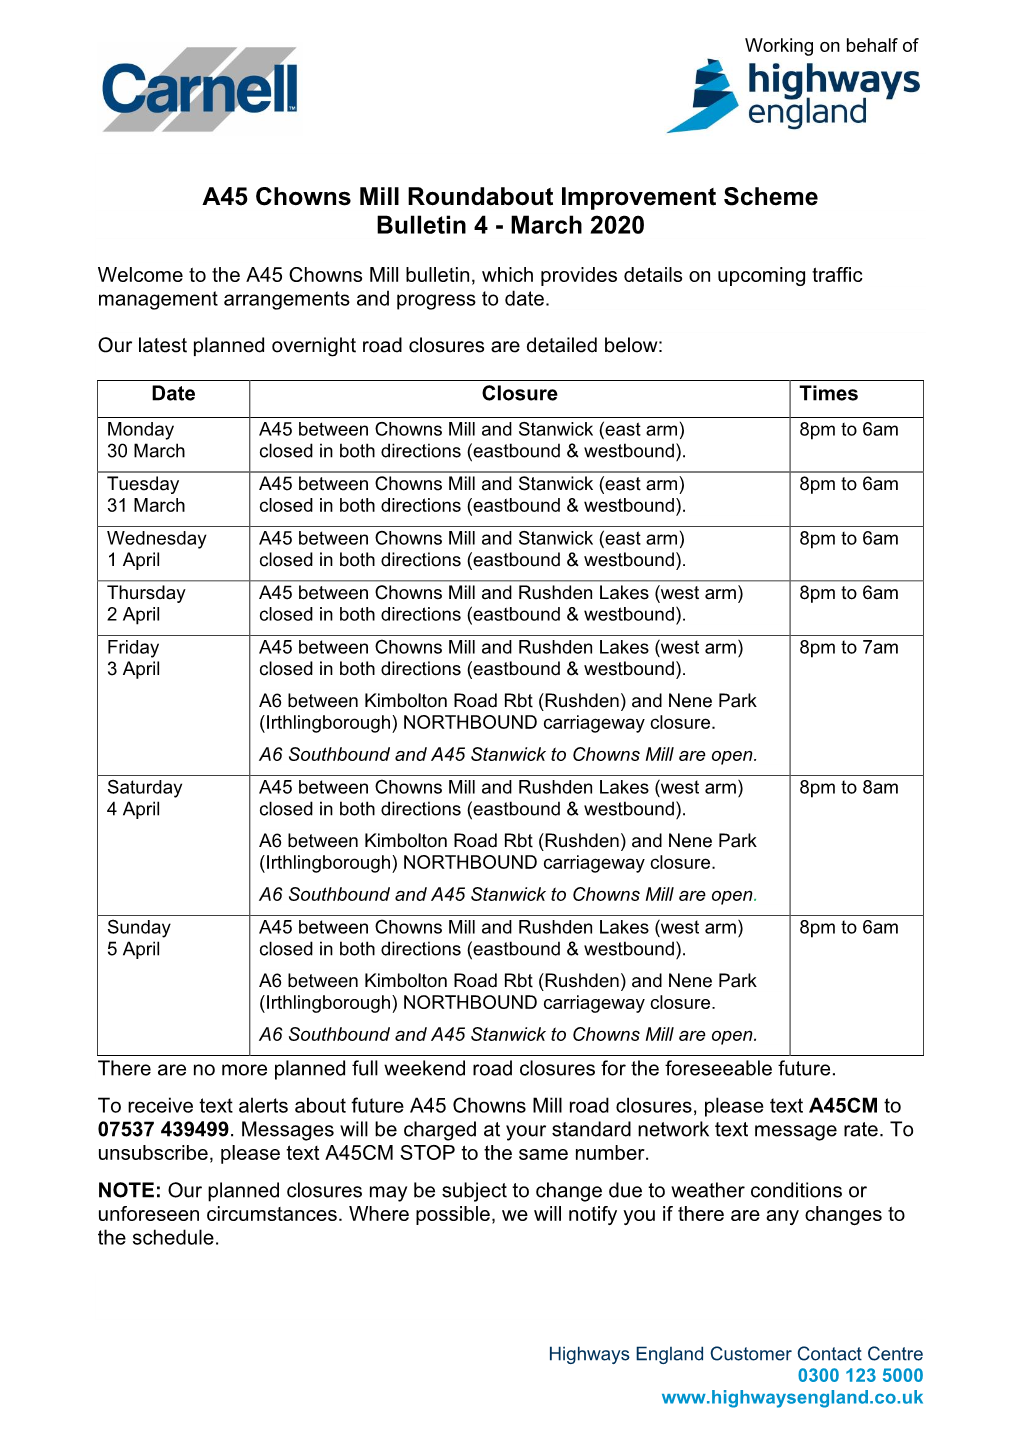 A45 Chowns Mill Roundabout Improvement Scheme Bulletin 4 - March 2020